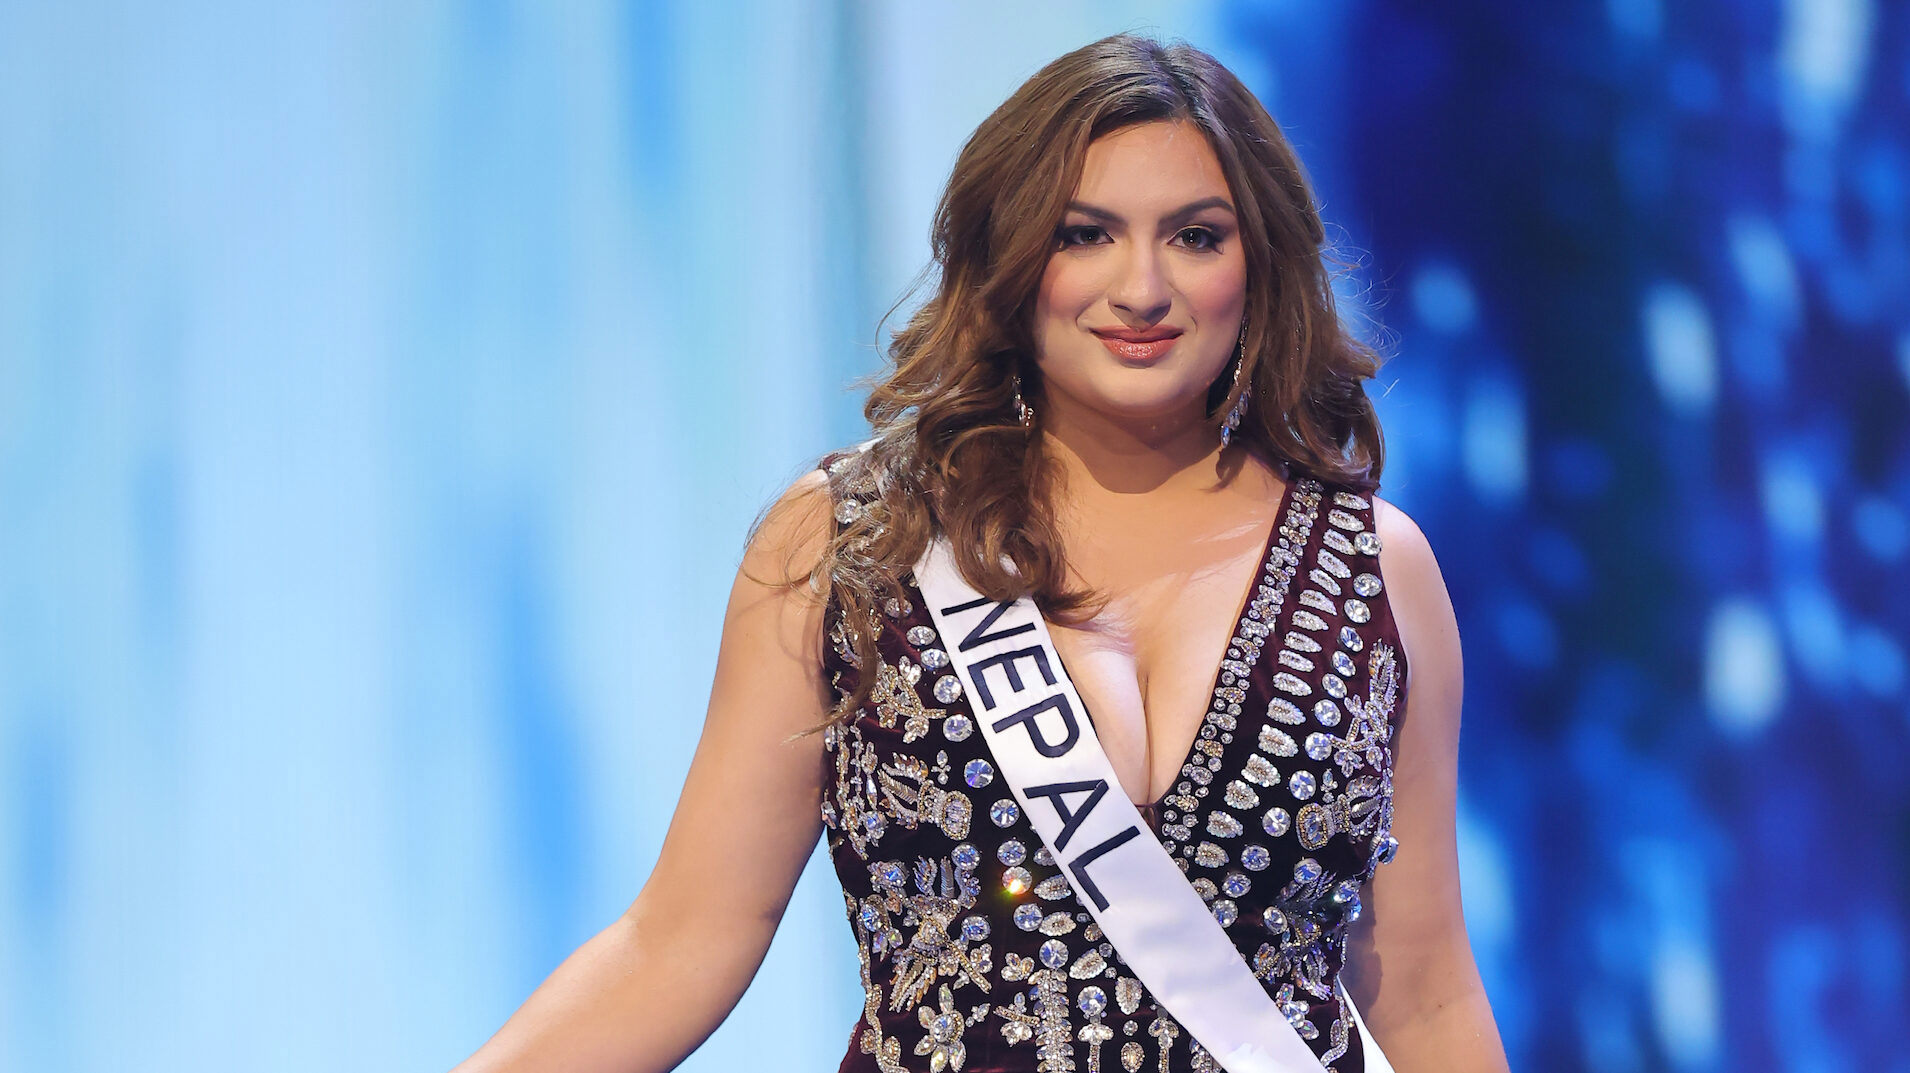 Plus-Size Miss Universe Contestant Reacts to ‘Very Cruel’ Critics